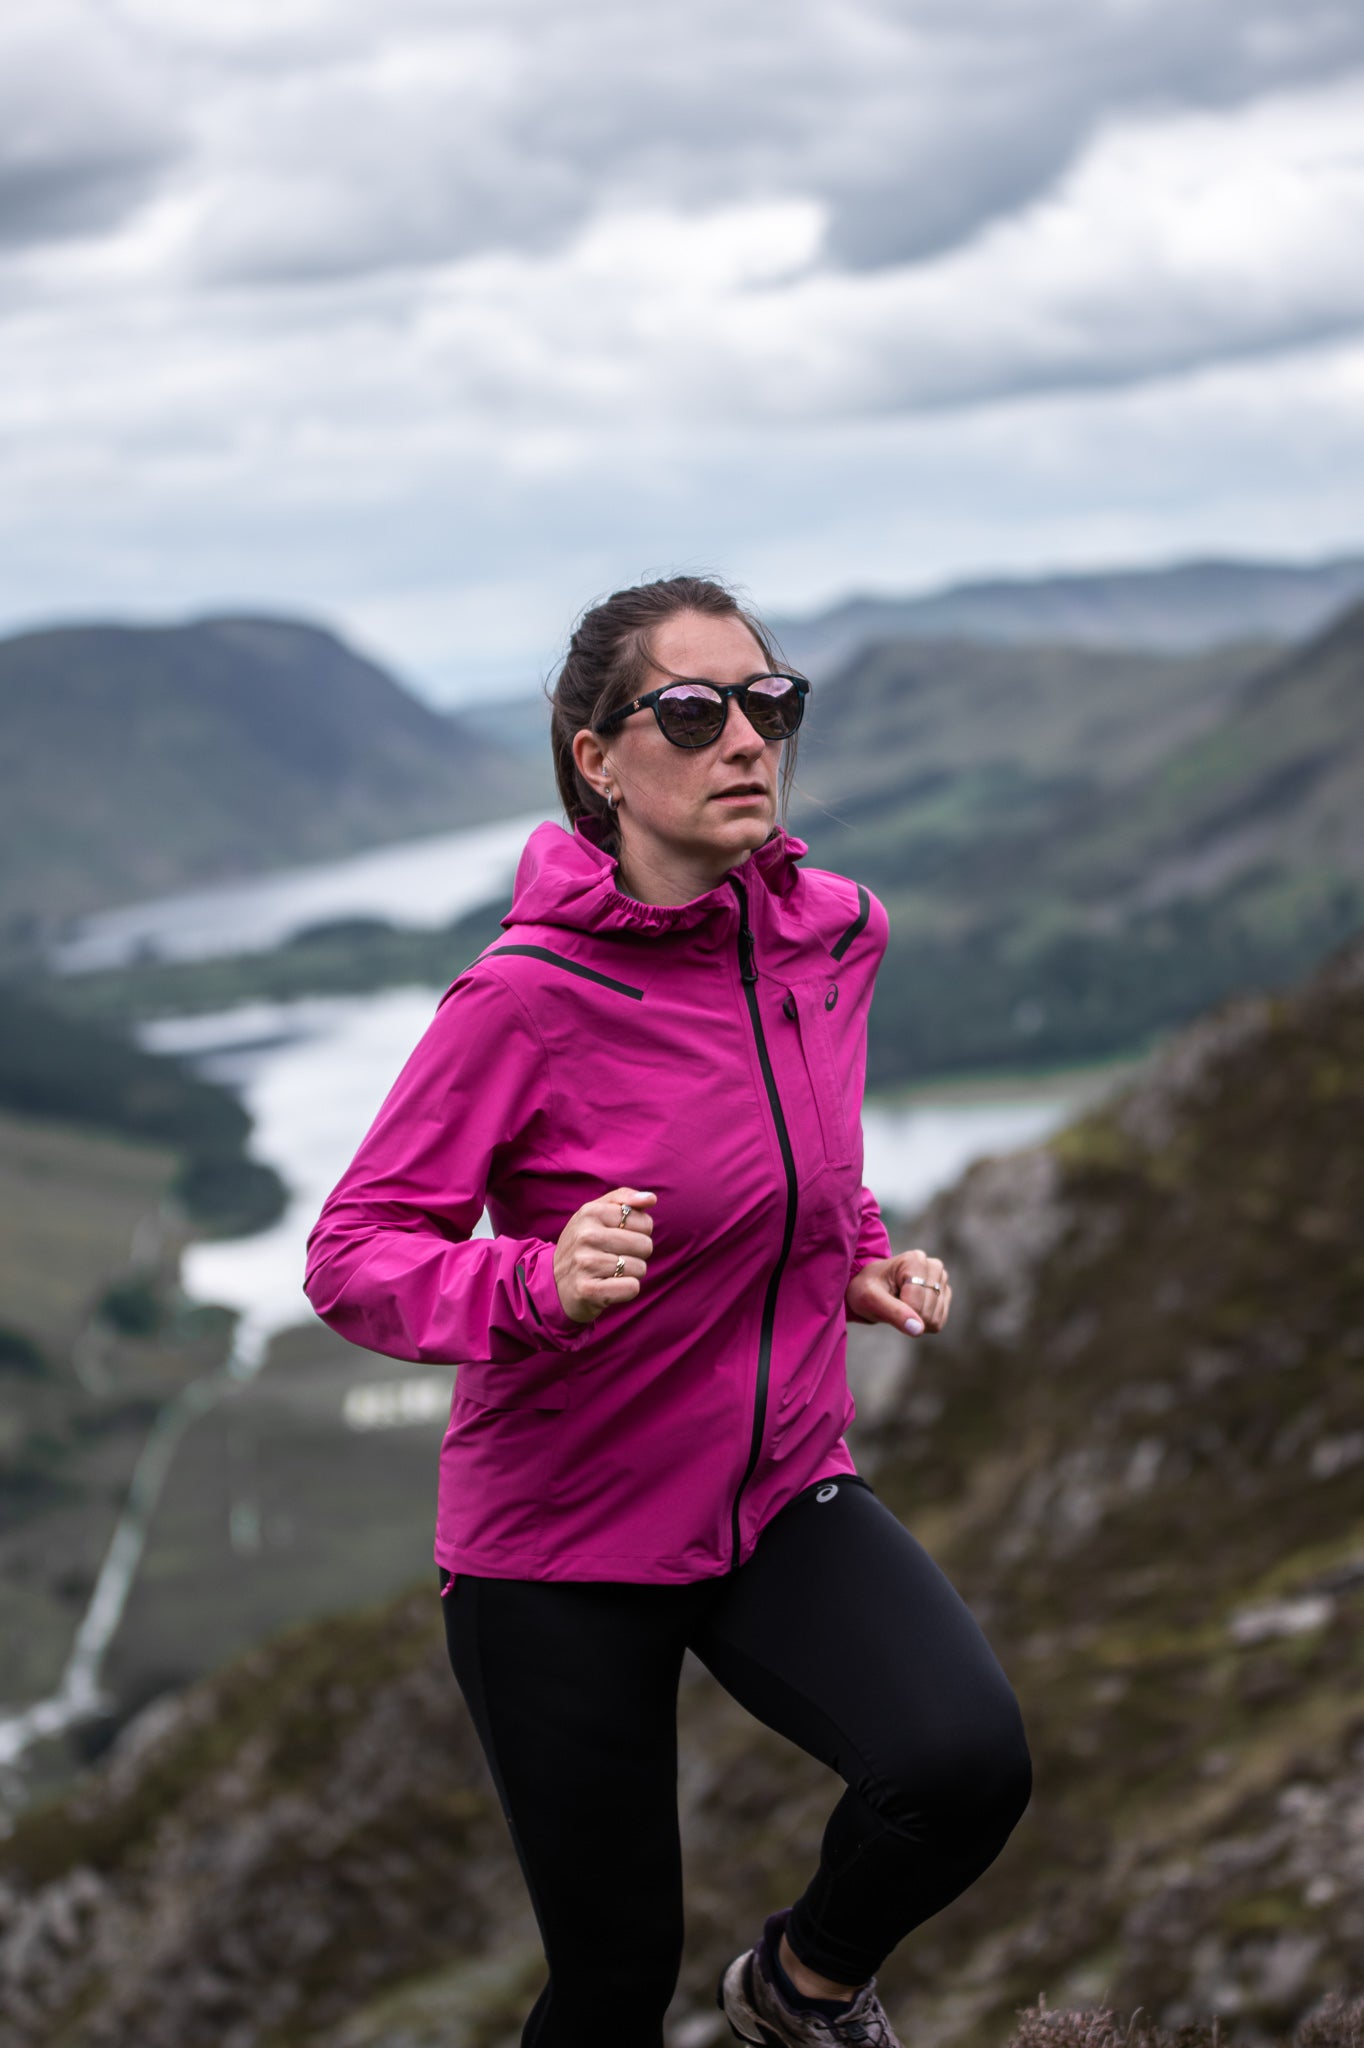 celina hanson trail runner styrkr athlete running up hill in a pink jacket